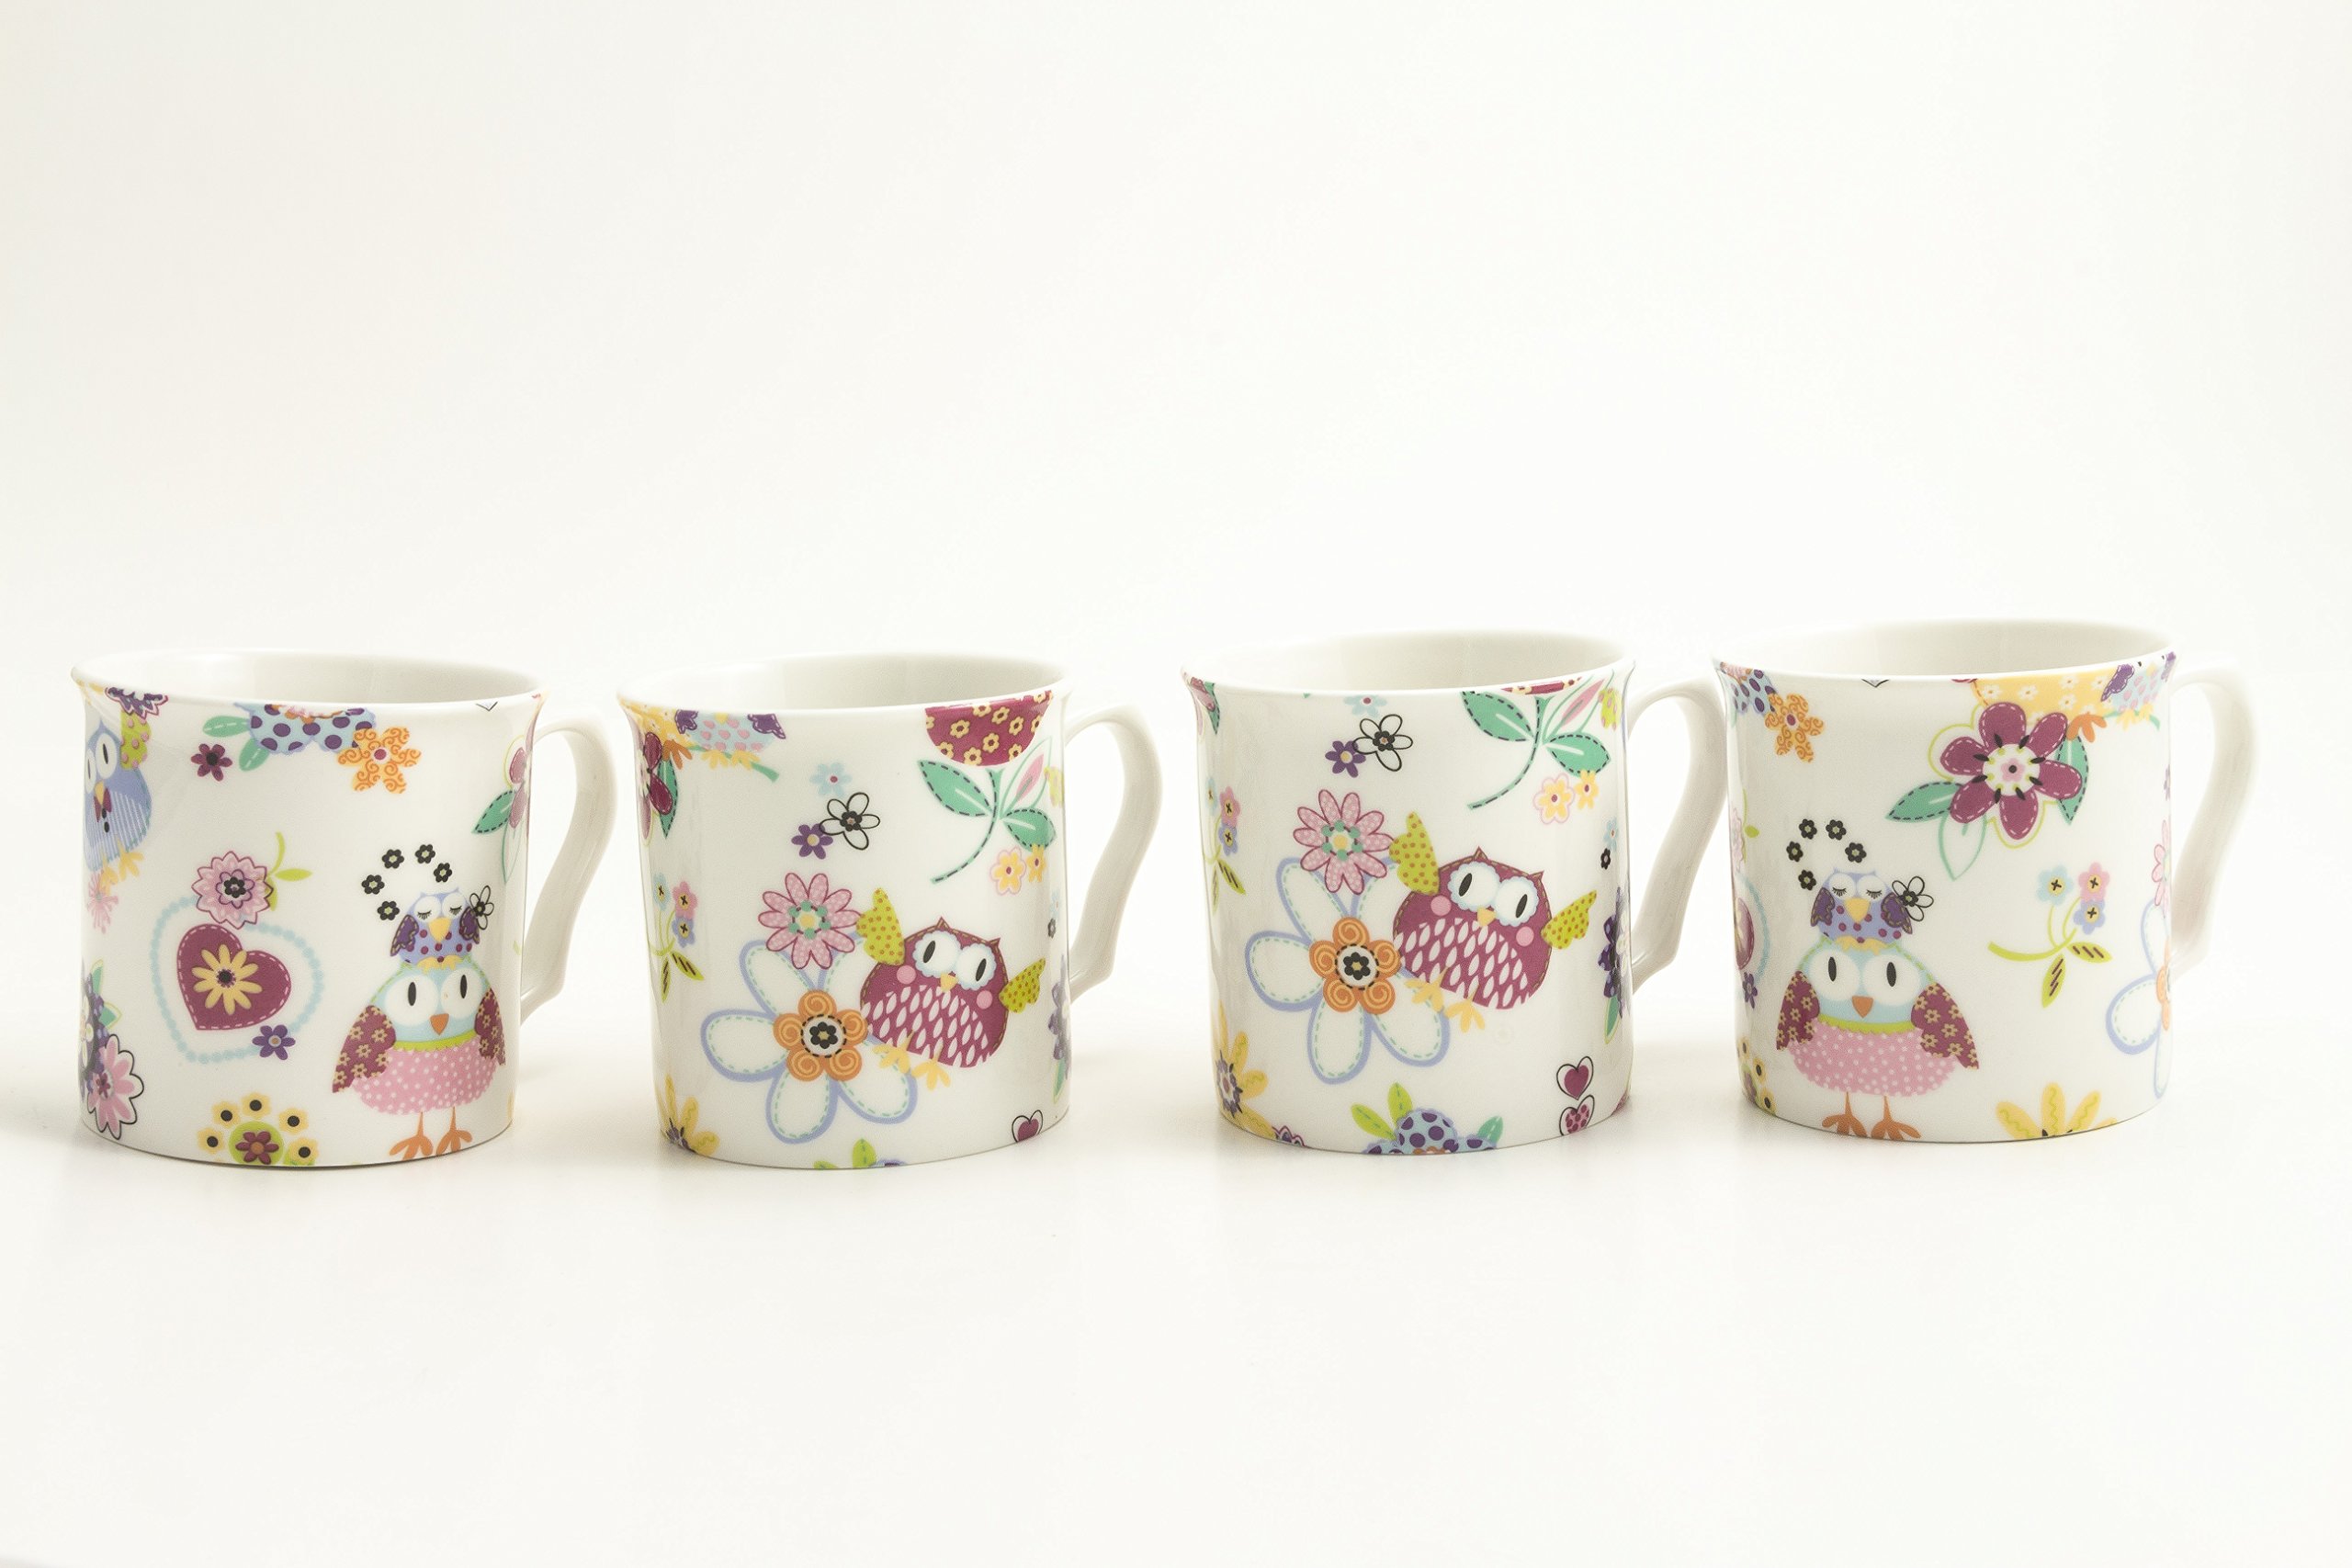 Happy Hoots Porcelain Gift Set - 4 Porcelain Mugs by Shannonbridge Ireland